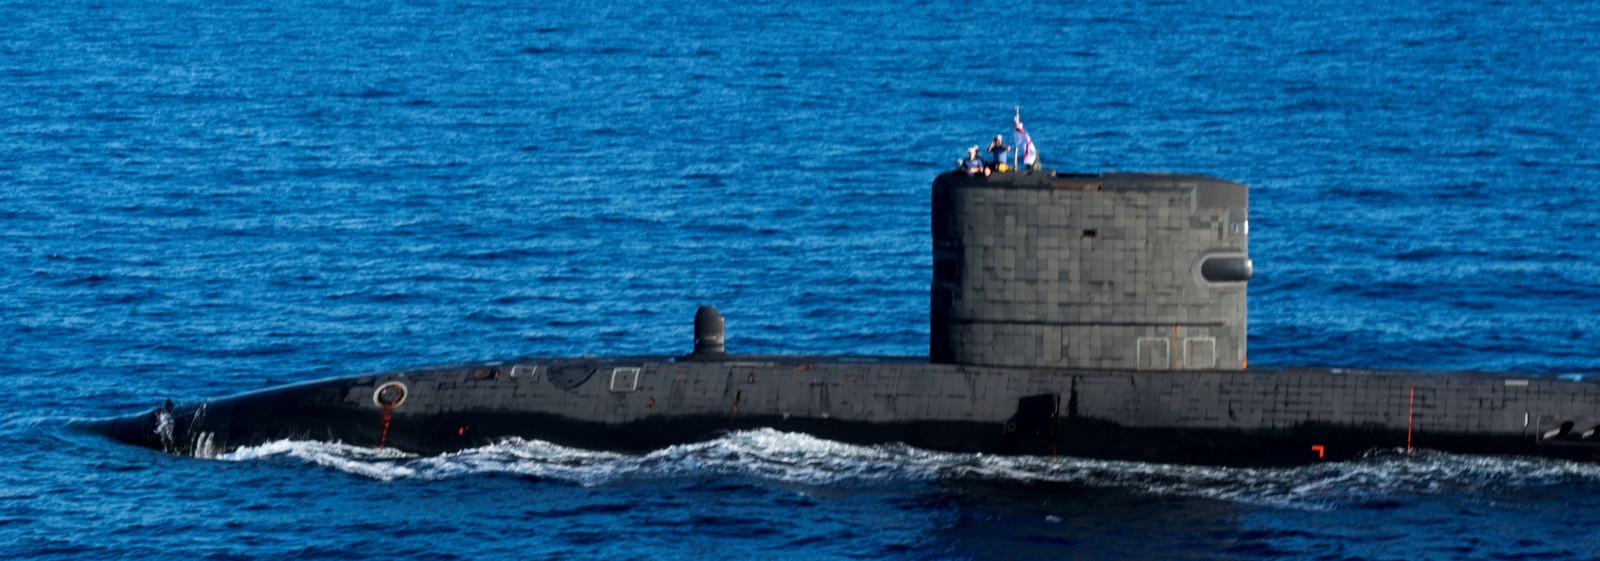 hms talent s-92 trafalgar class attack submarine royal navy 02